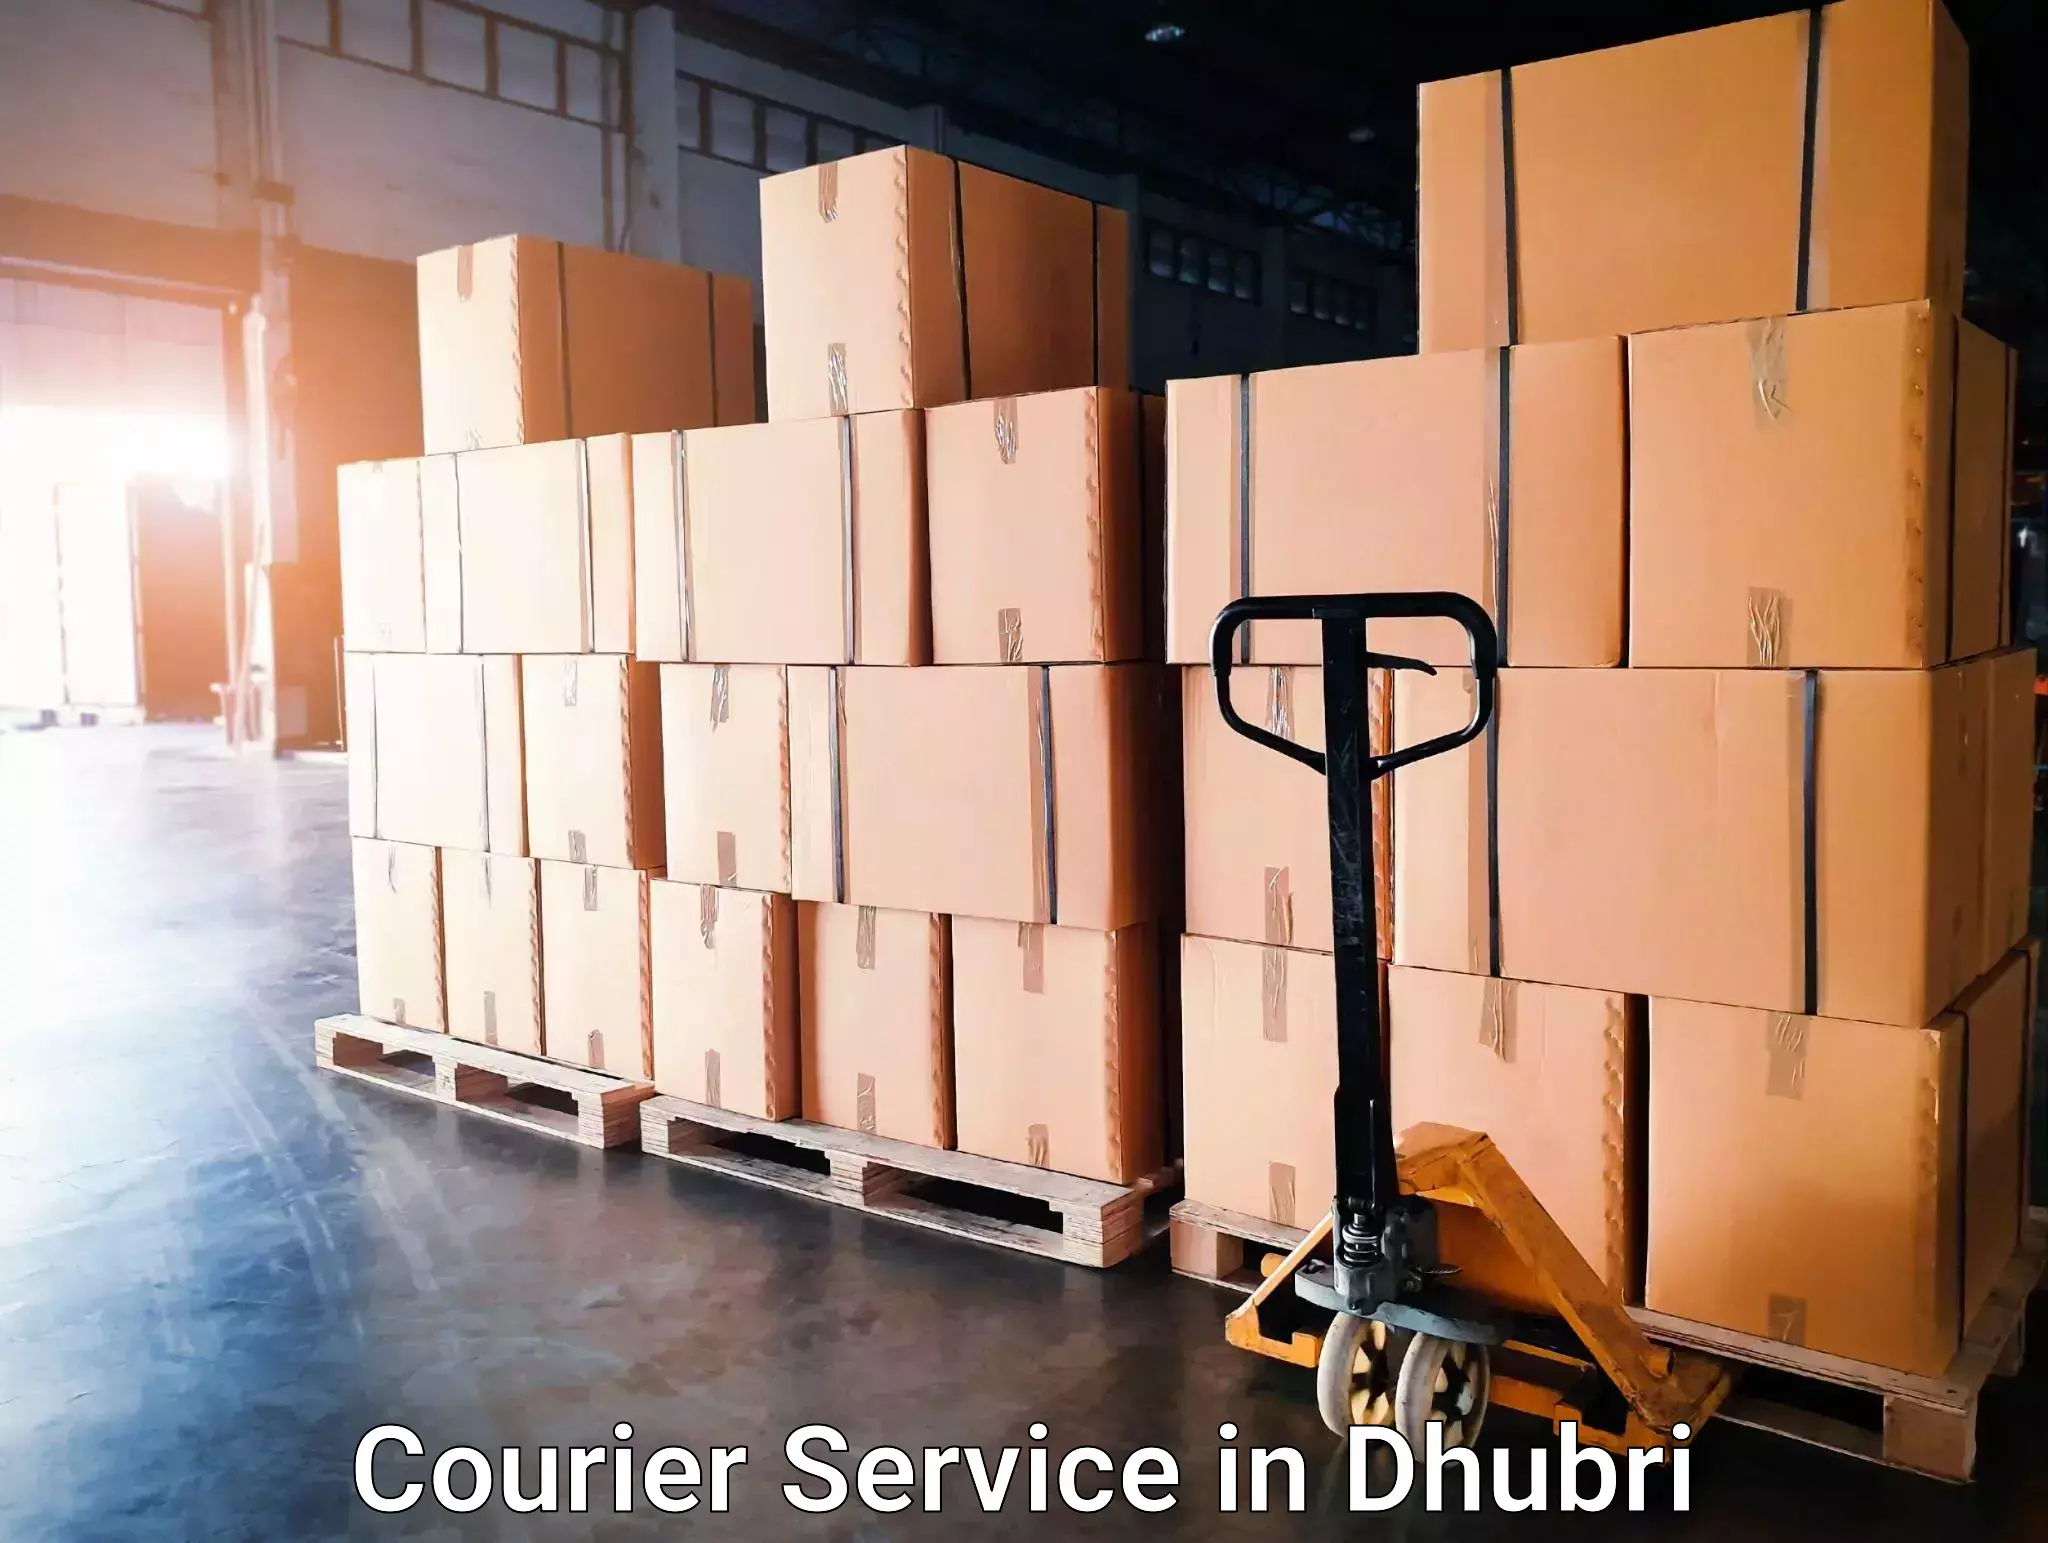 E-commerce logistics support in Dhubri